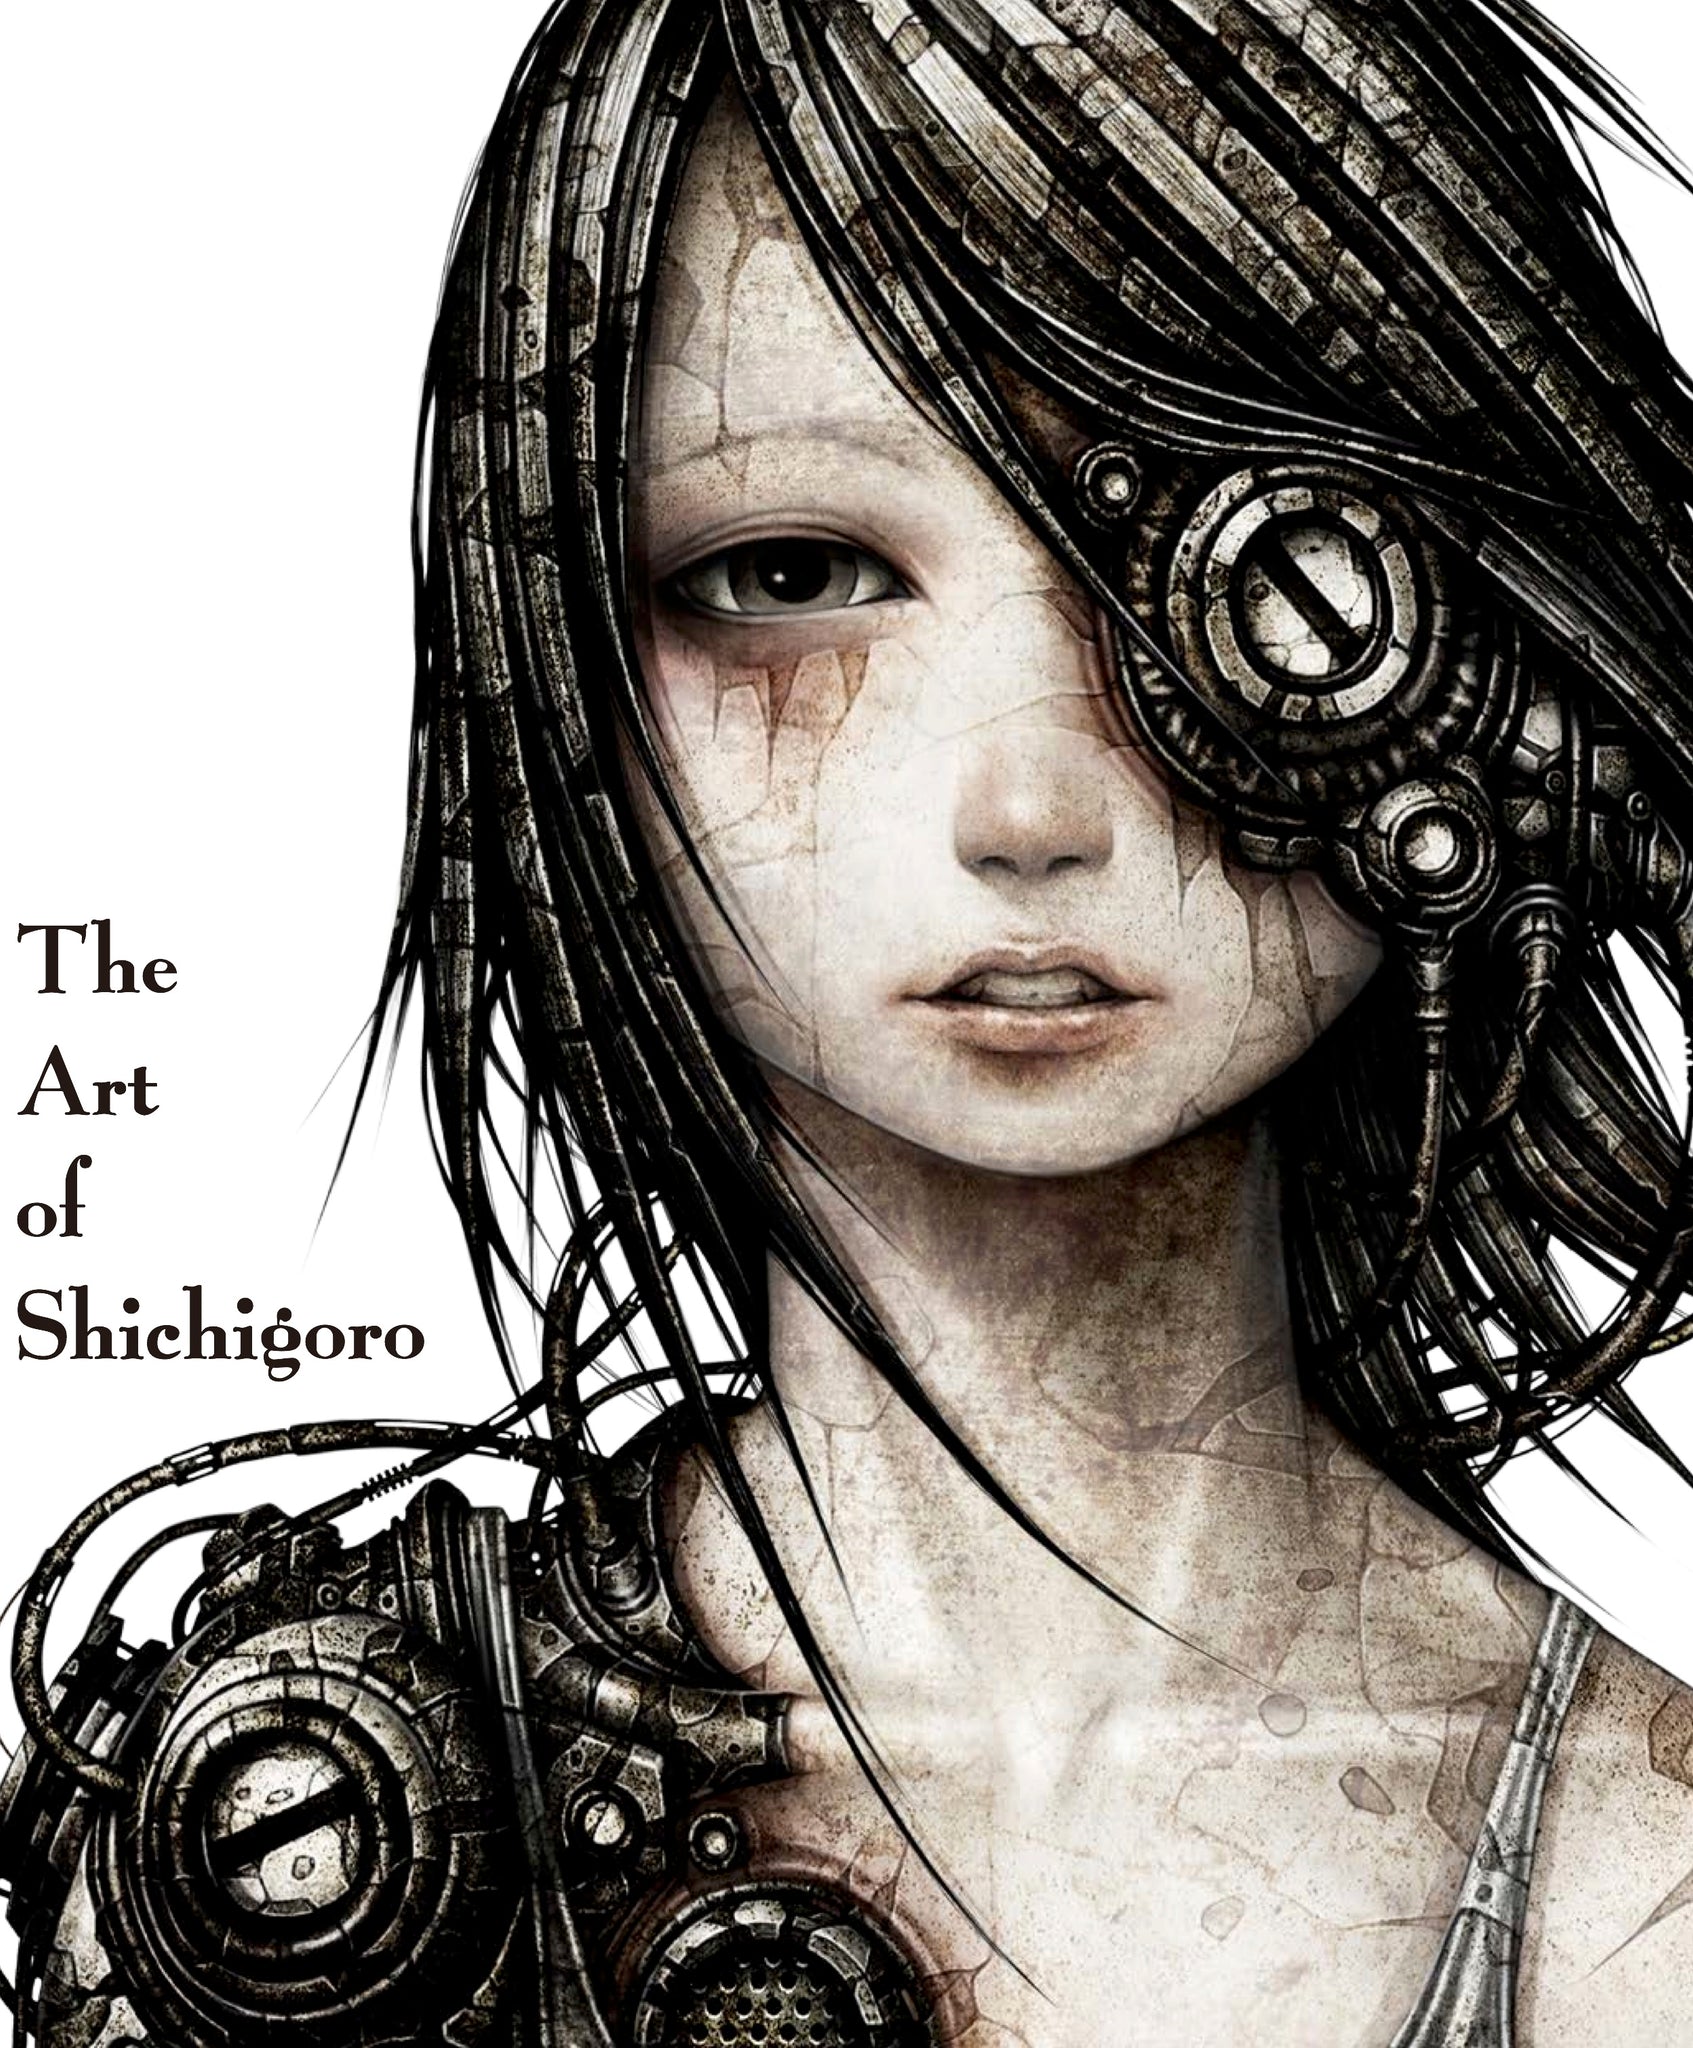 Art of Shichigoro, The cover